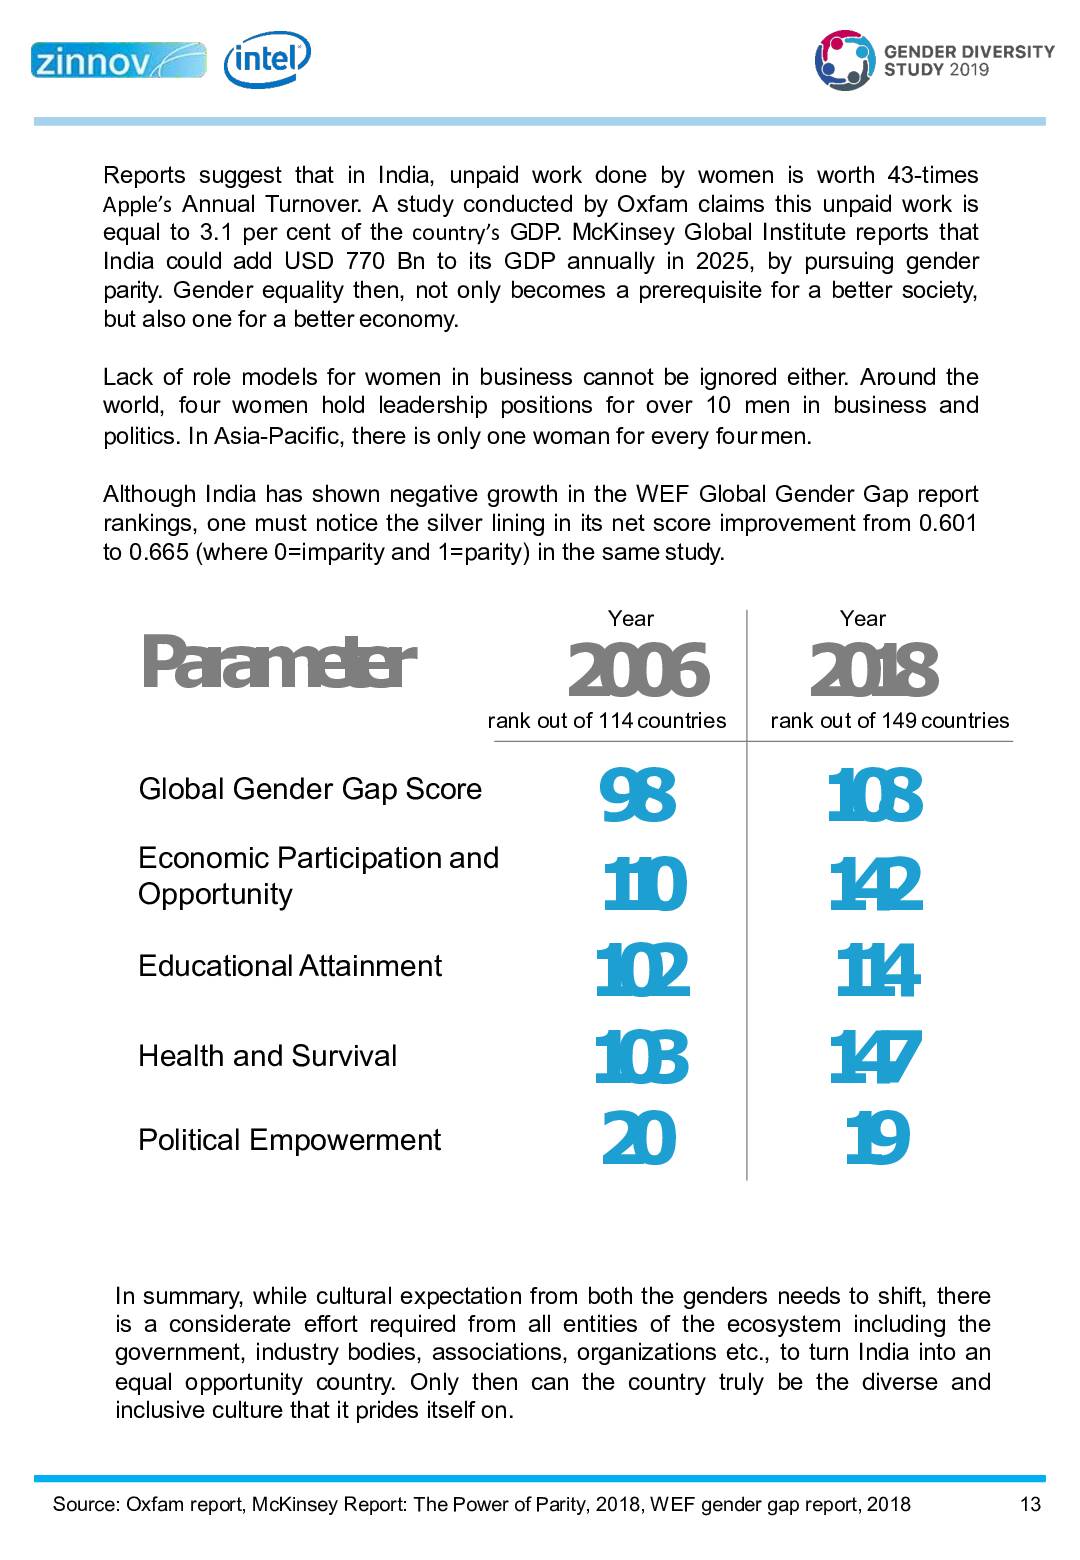 Zinnov Intel Gender Diversity Benchmark Study 201913